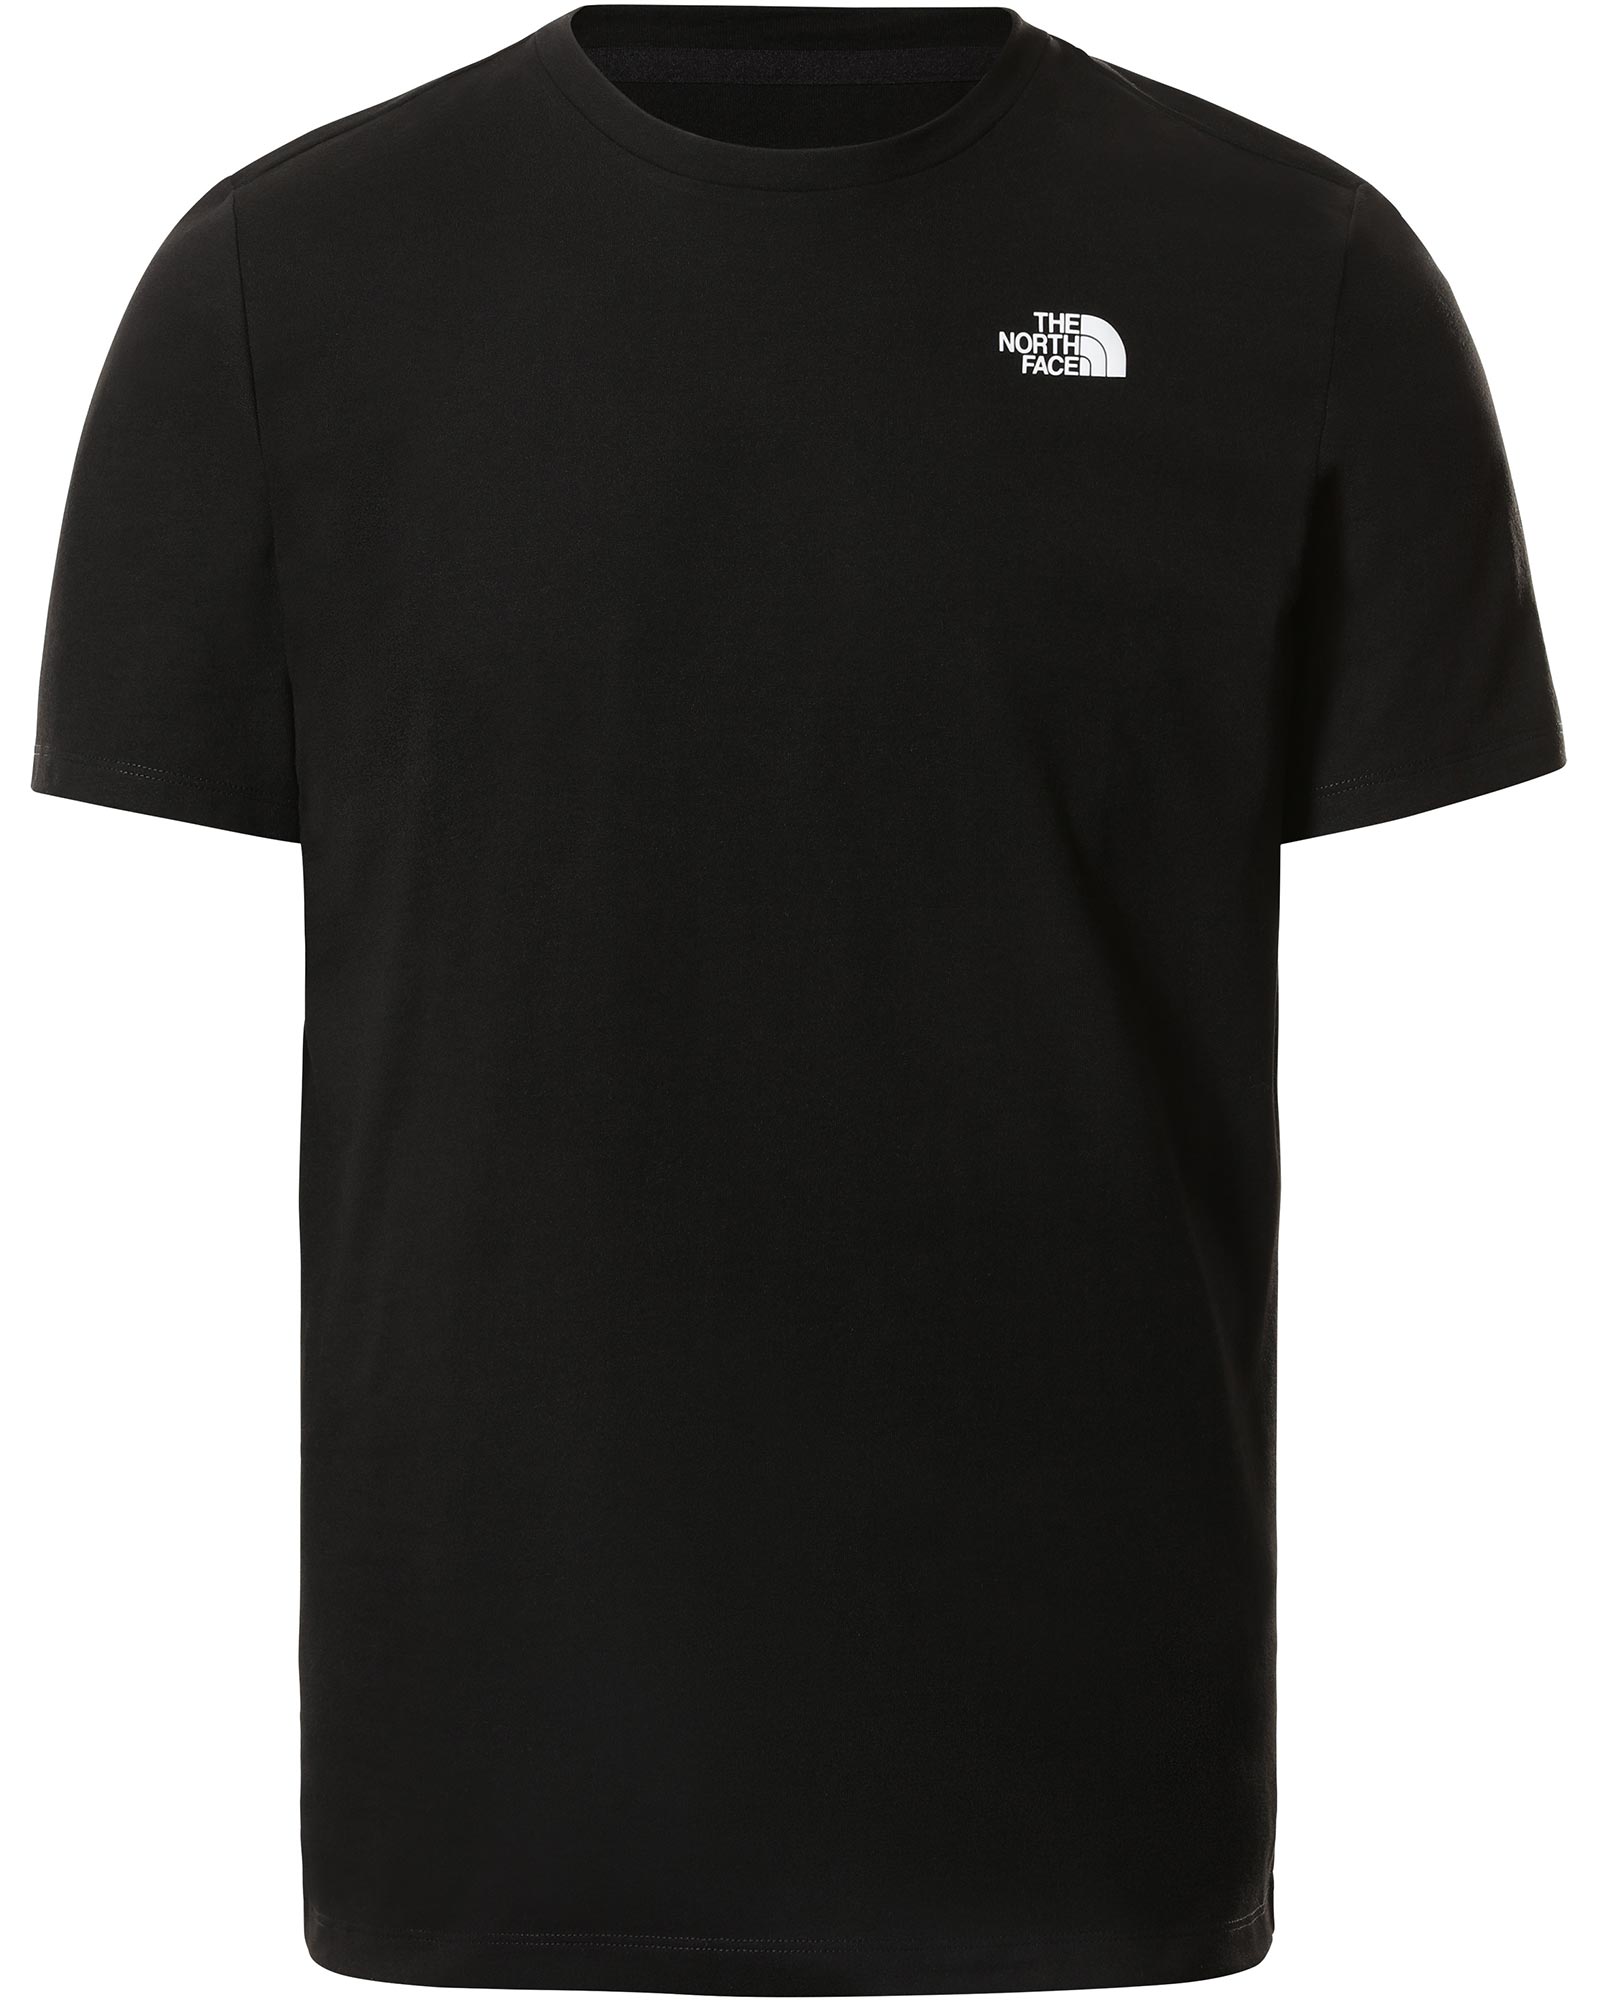 The North Face Foundation Men’s T Shirt - TNF Black XS